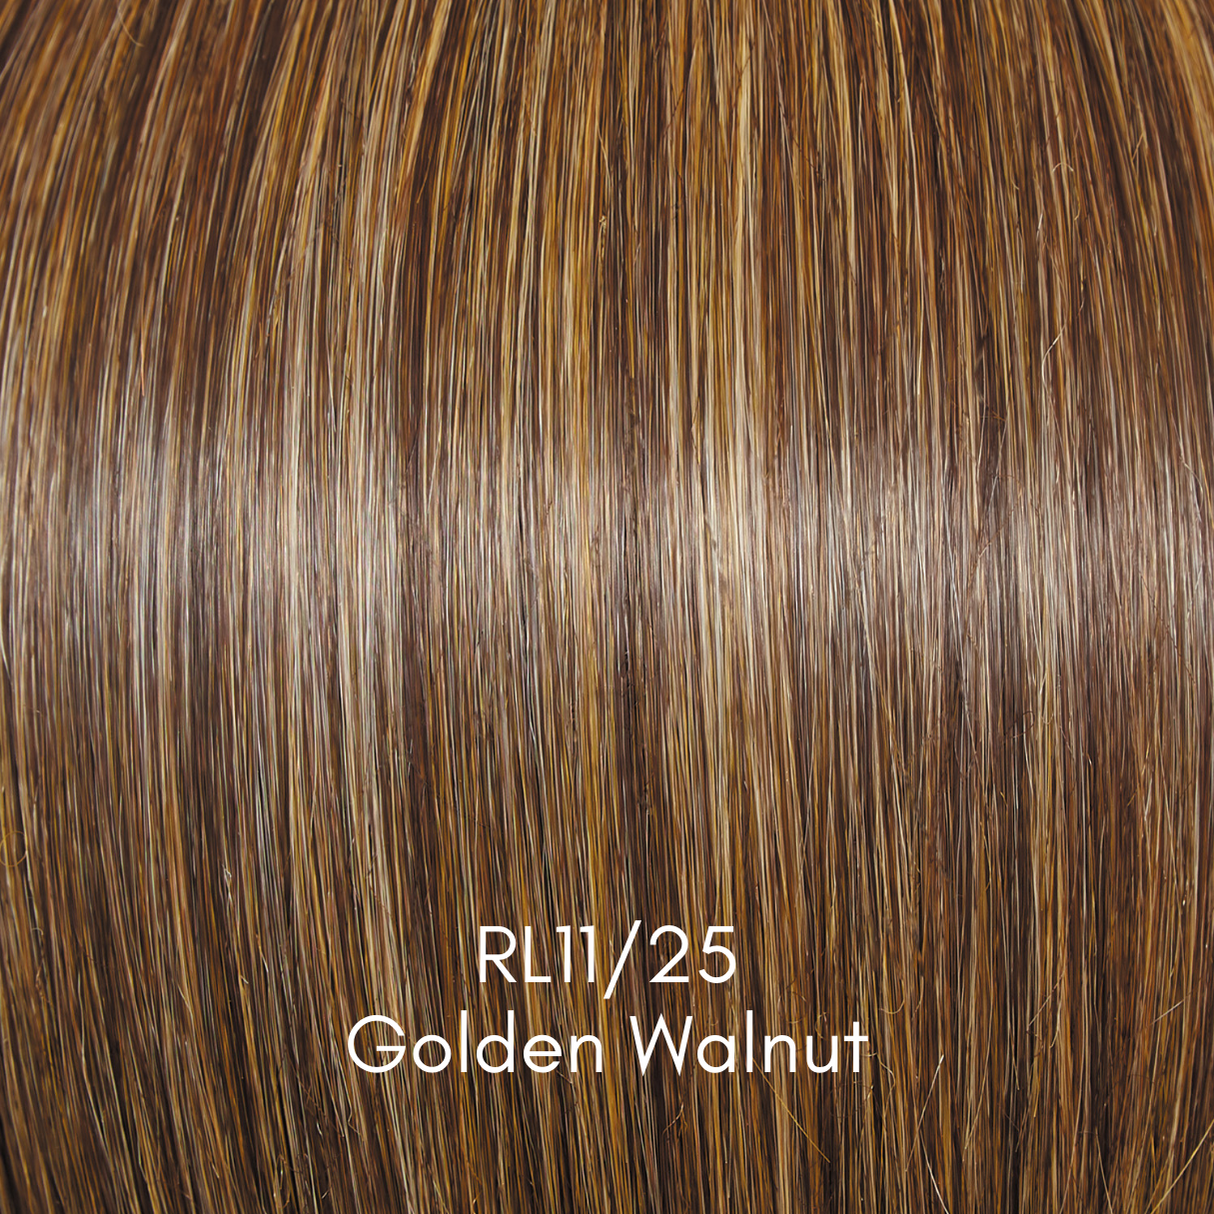 Flirt Alert - Signature Wig Collection by Raquel Welch